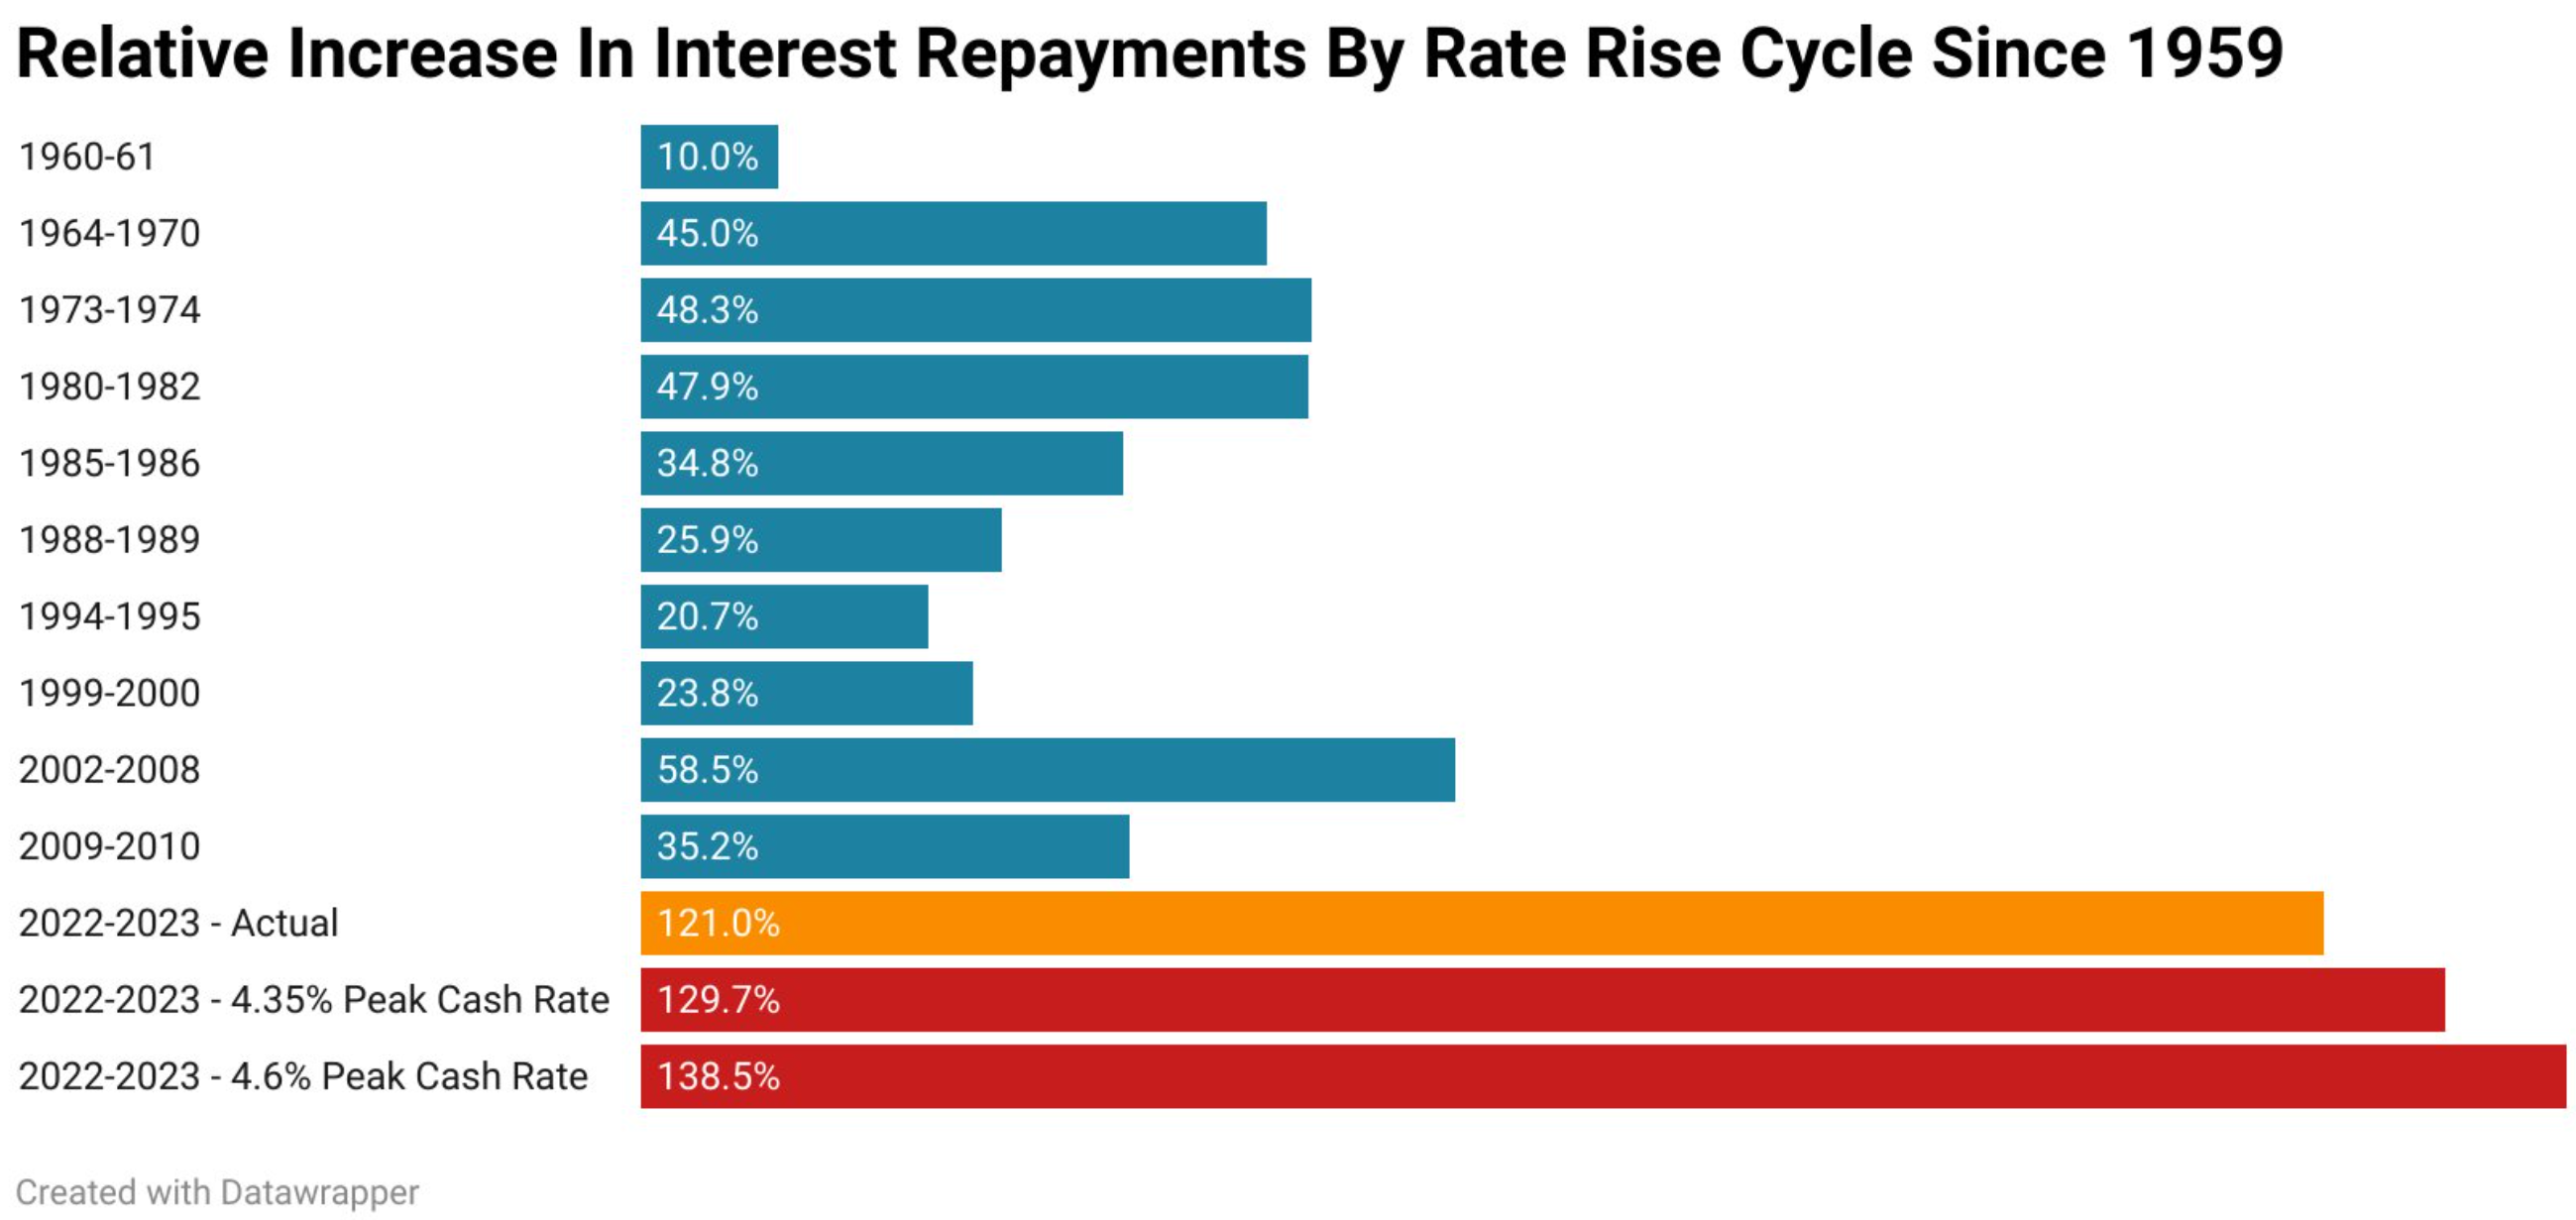 Relative increase in interest repayments